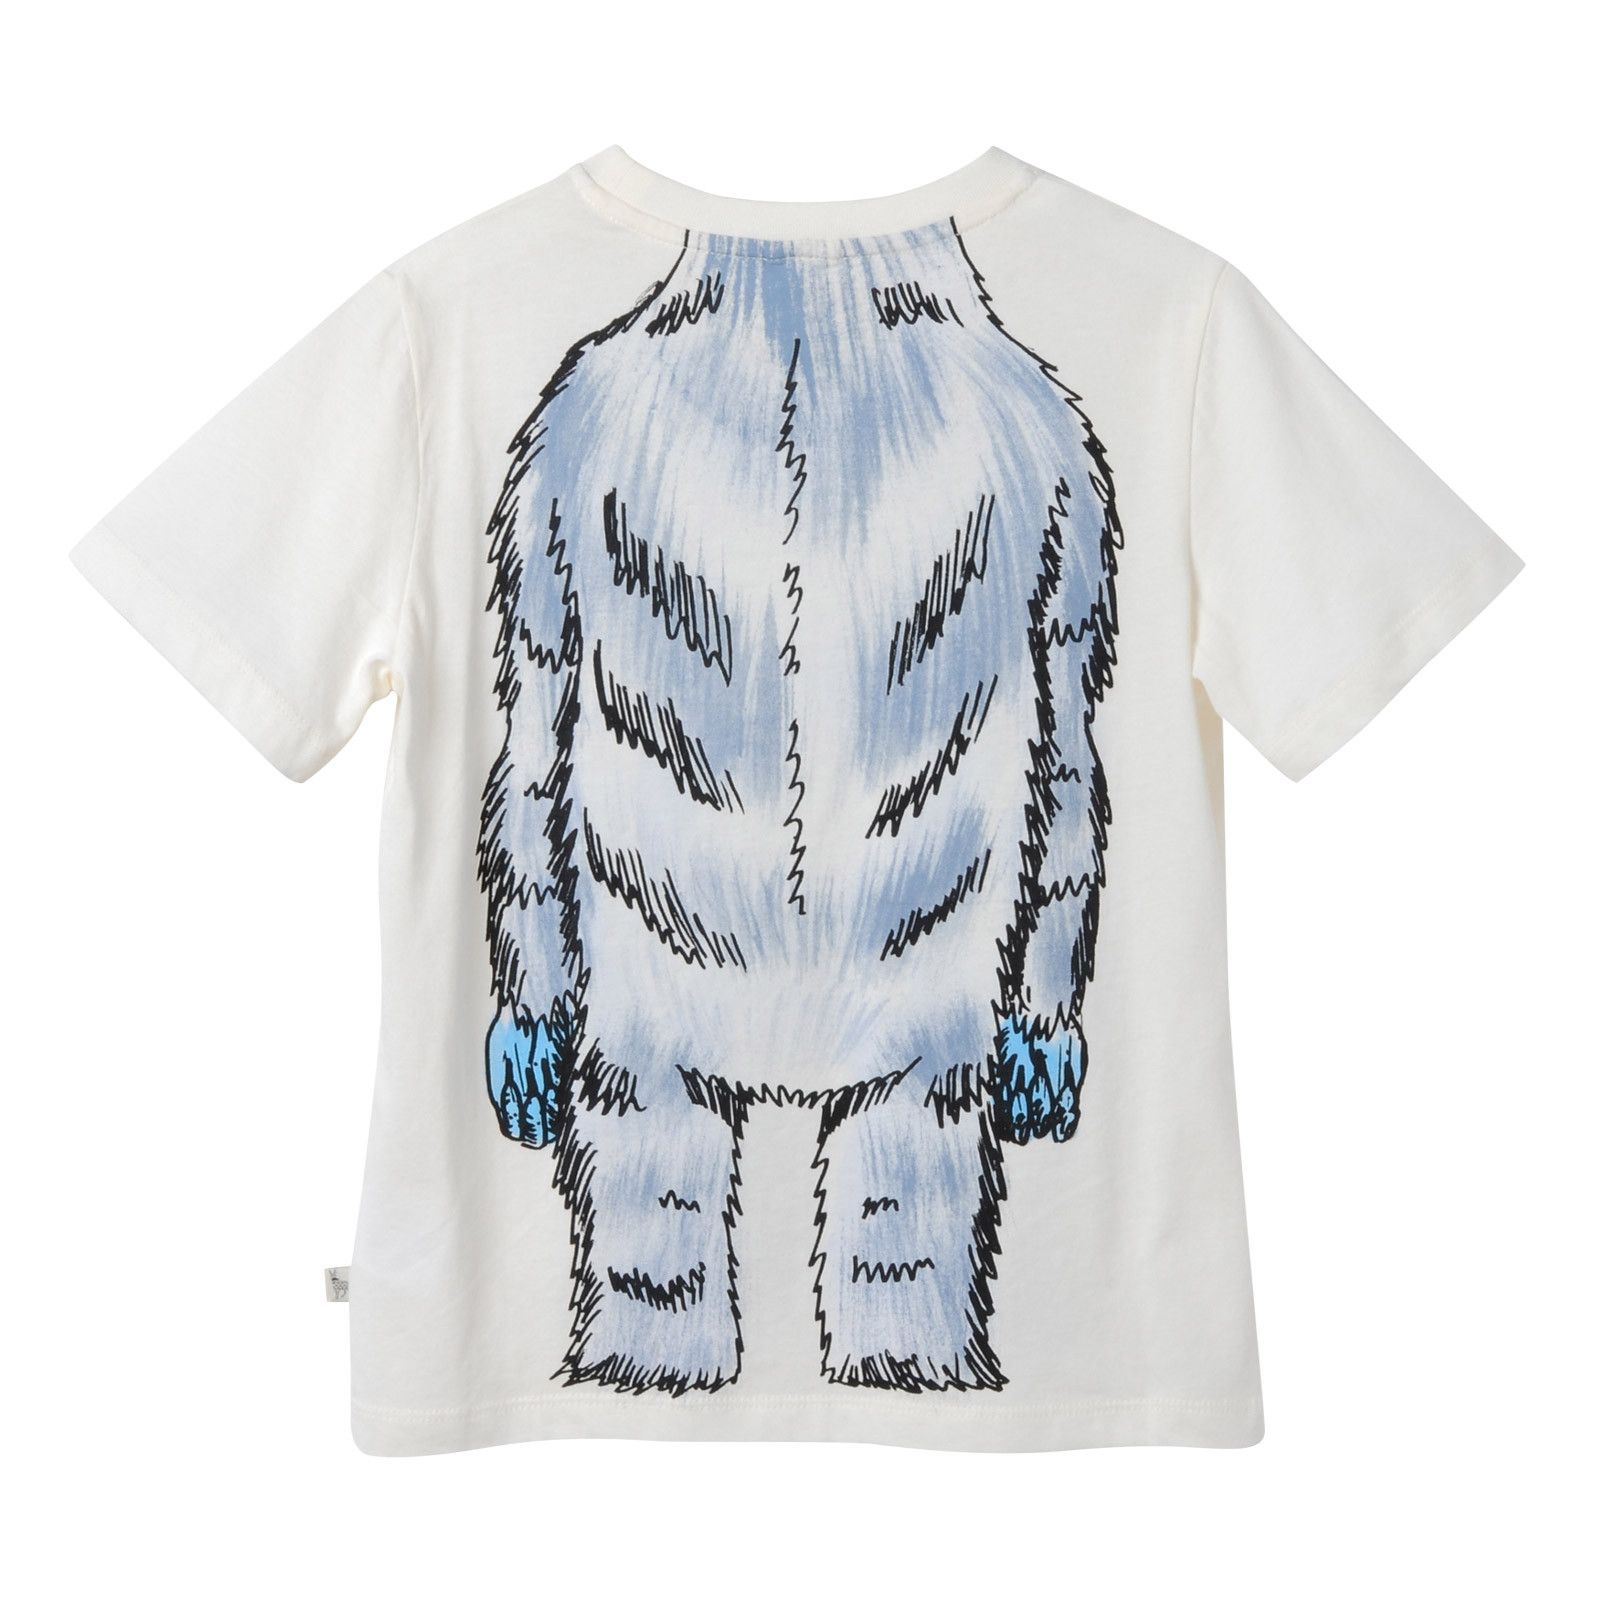 Boys White Cotton T-Shirt With Orangutan Print - CÉMAROSE | Children's Fashion Store - 2